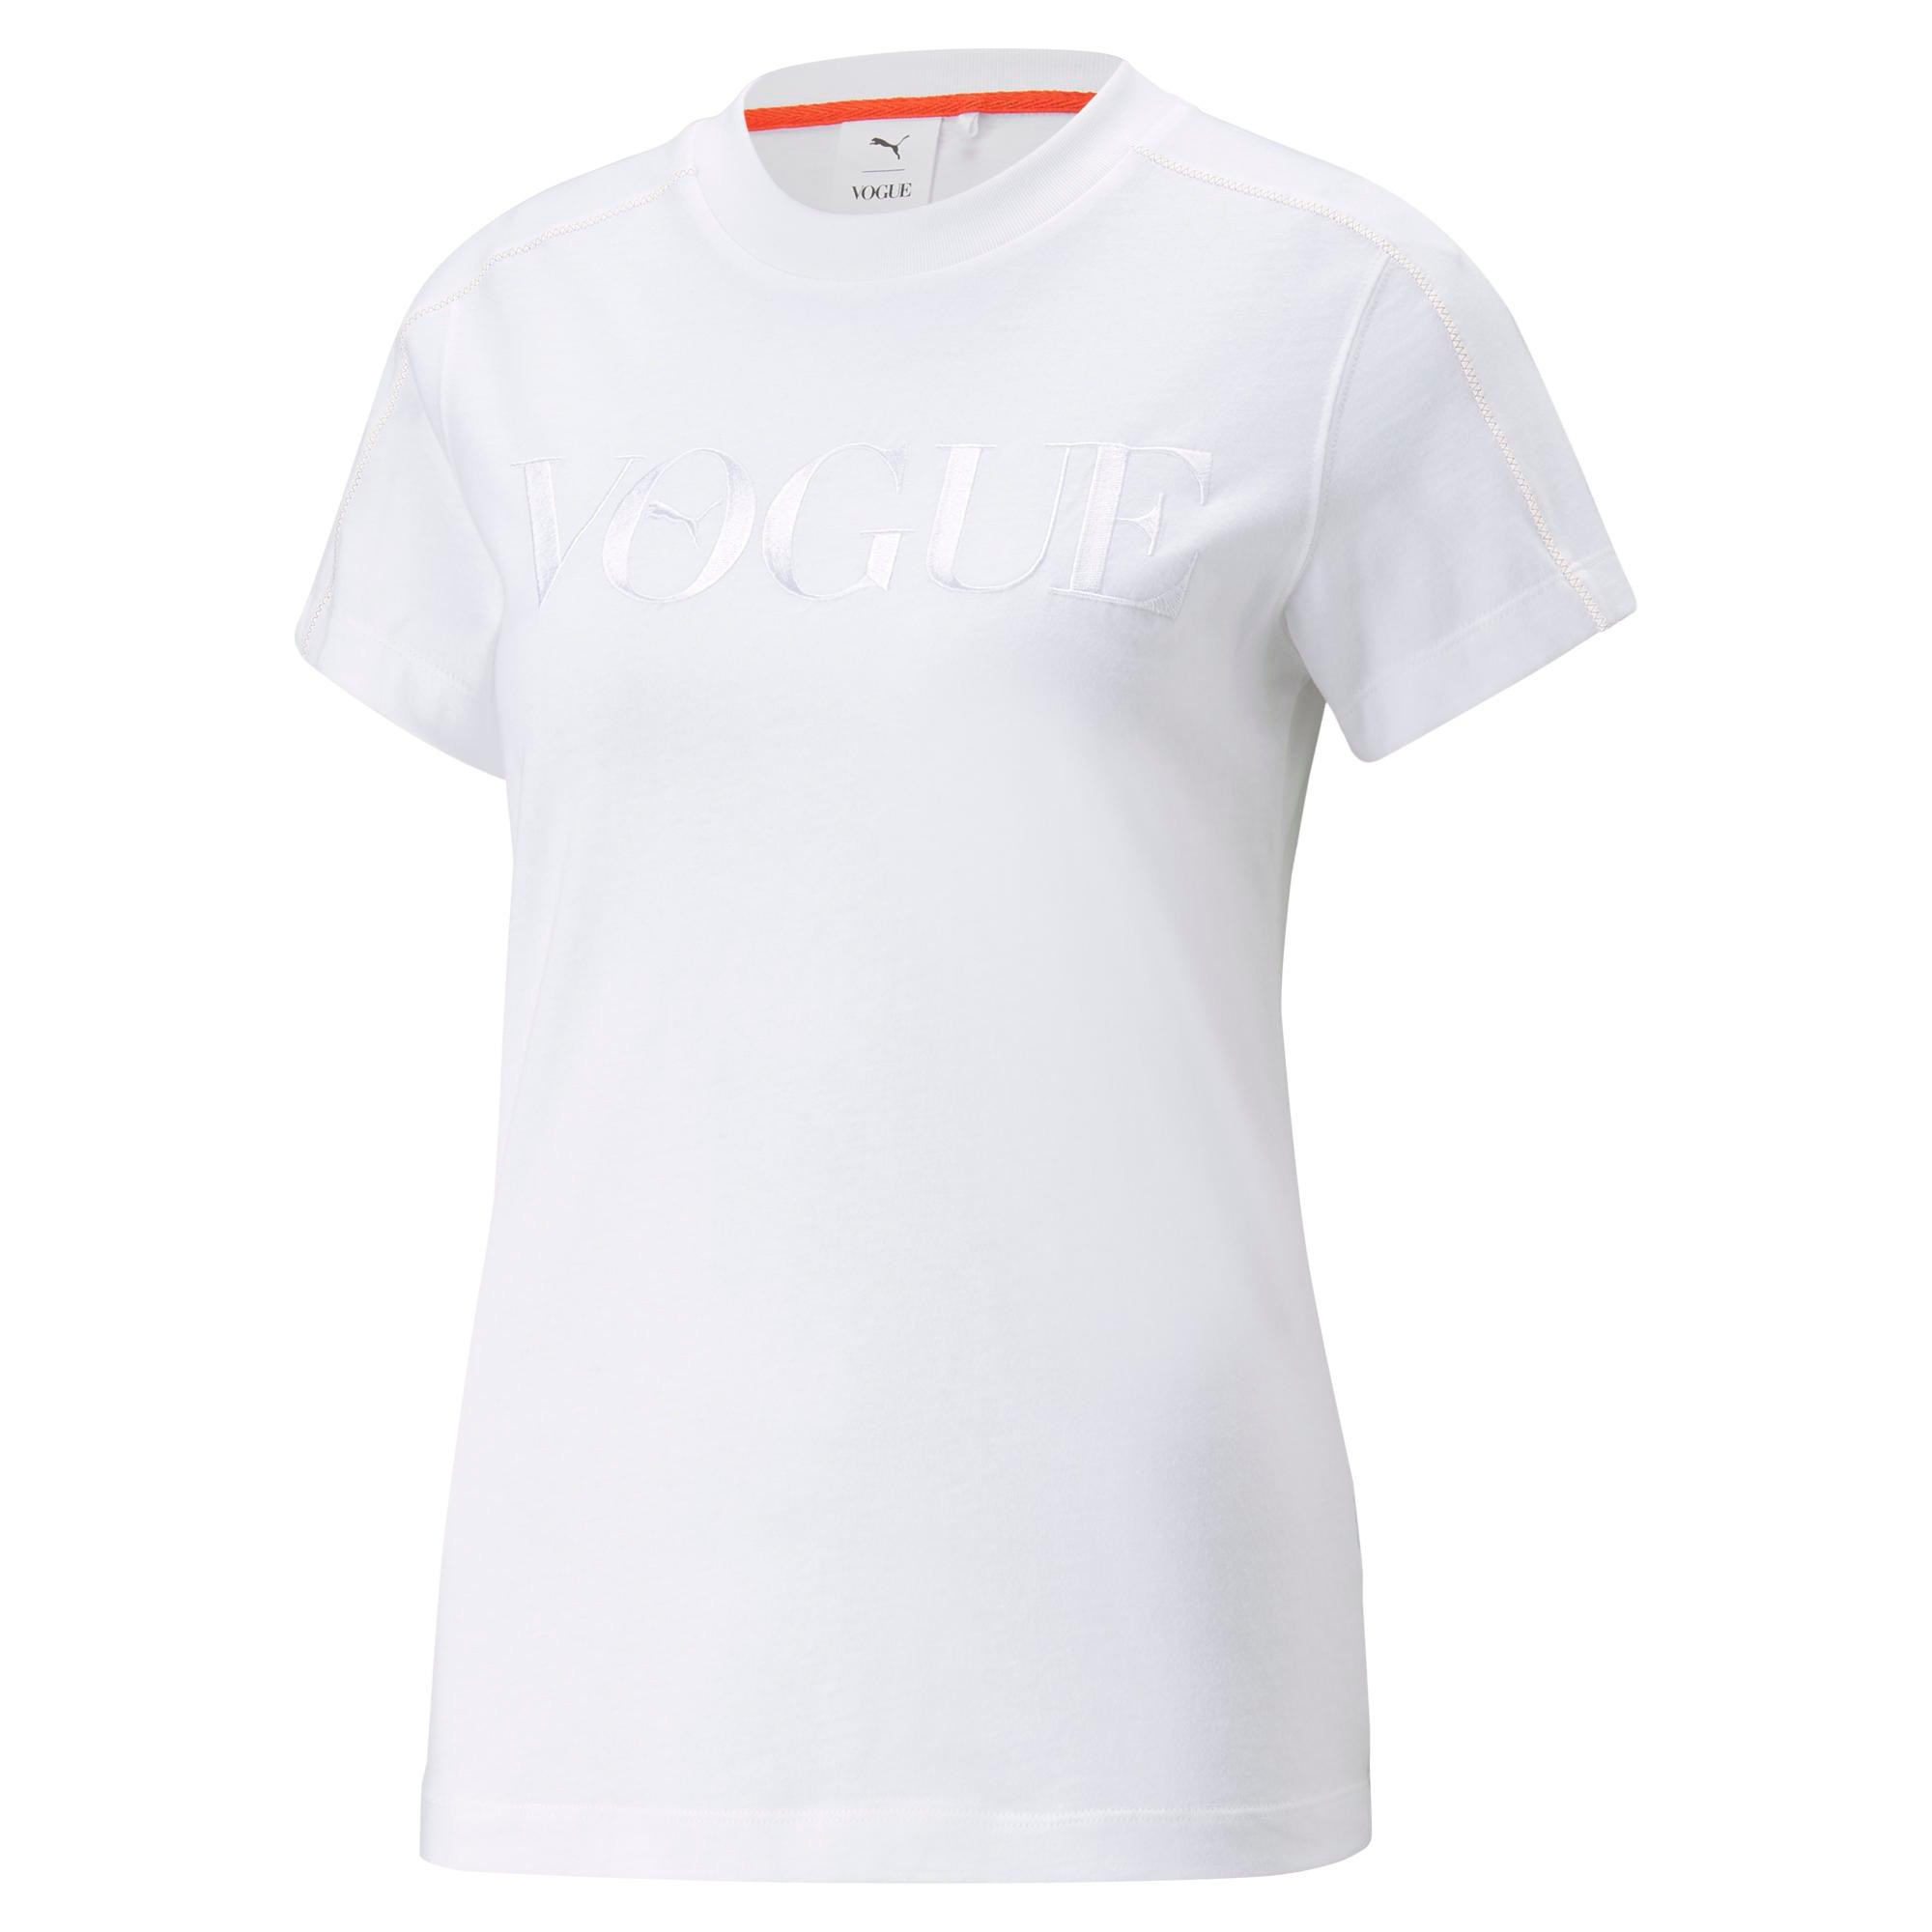 Puma x Vogue T-shirt, White, large image number 0